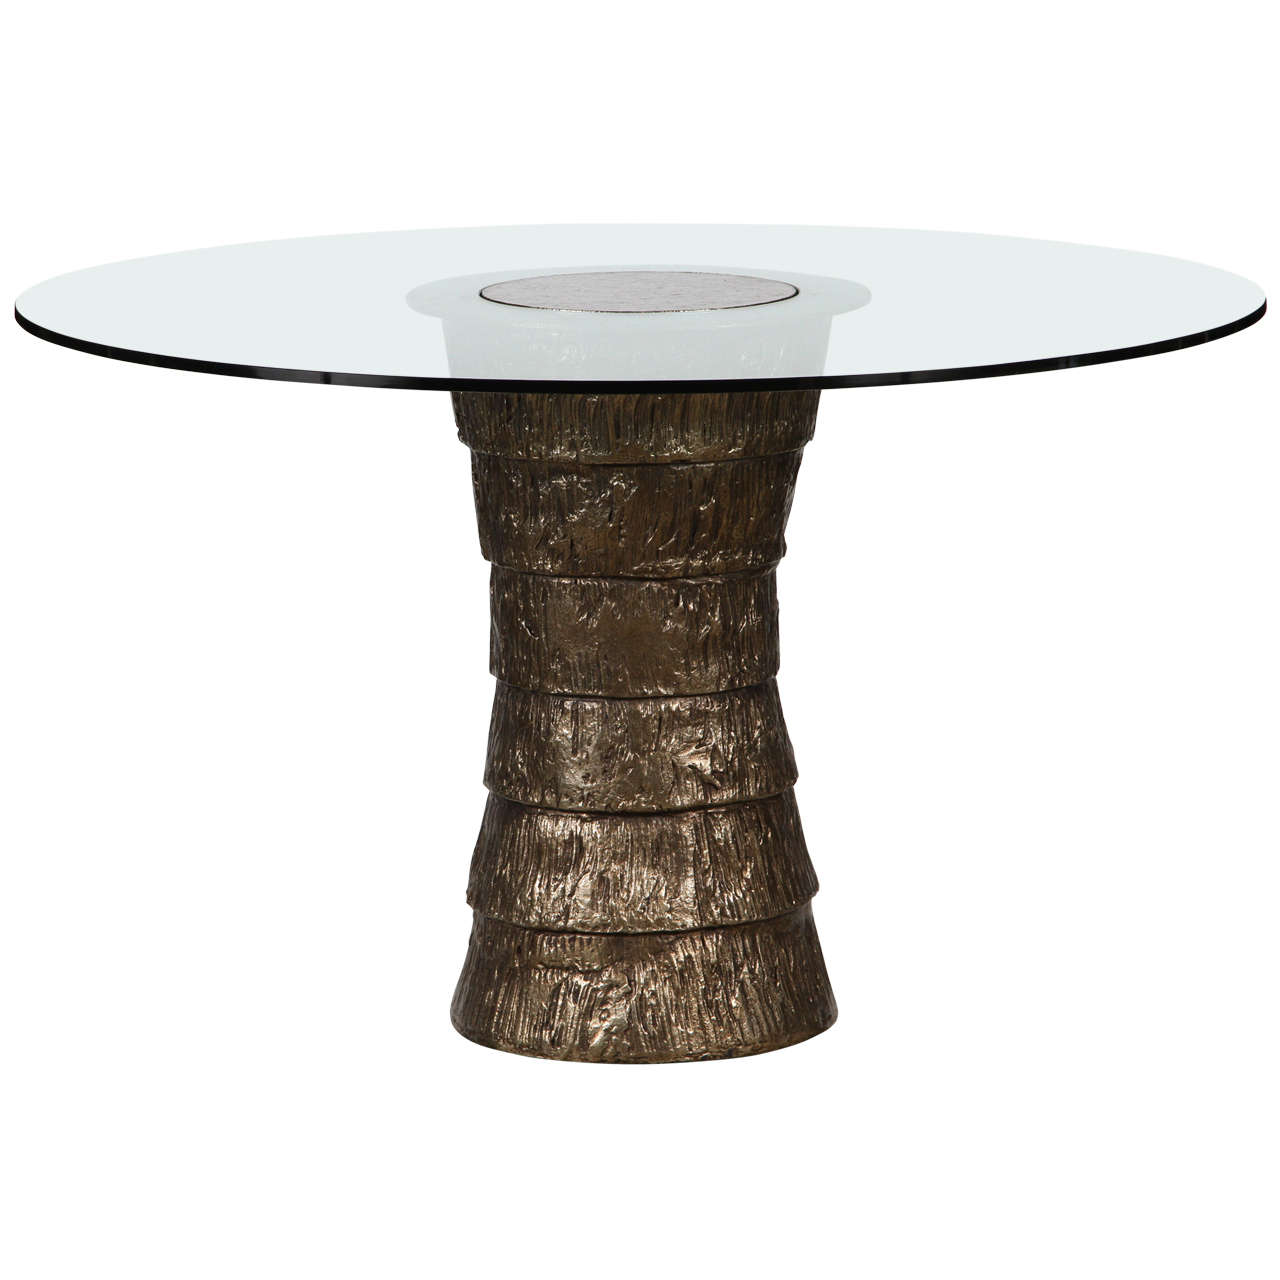 Sculptural Brutalist pedestal-style table, 21st century, offered by Paul Marra Design